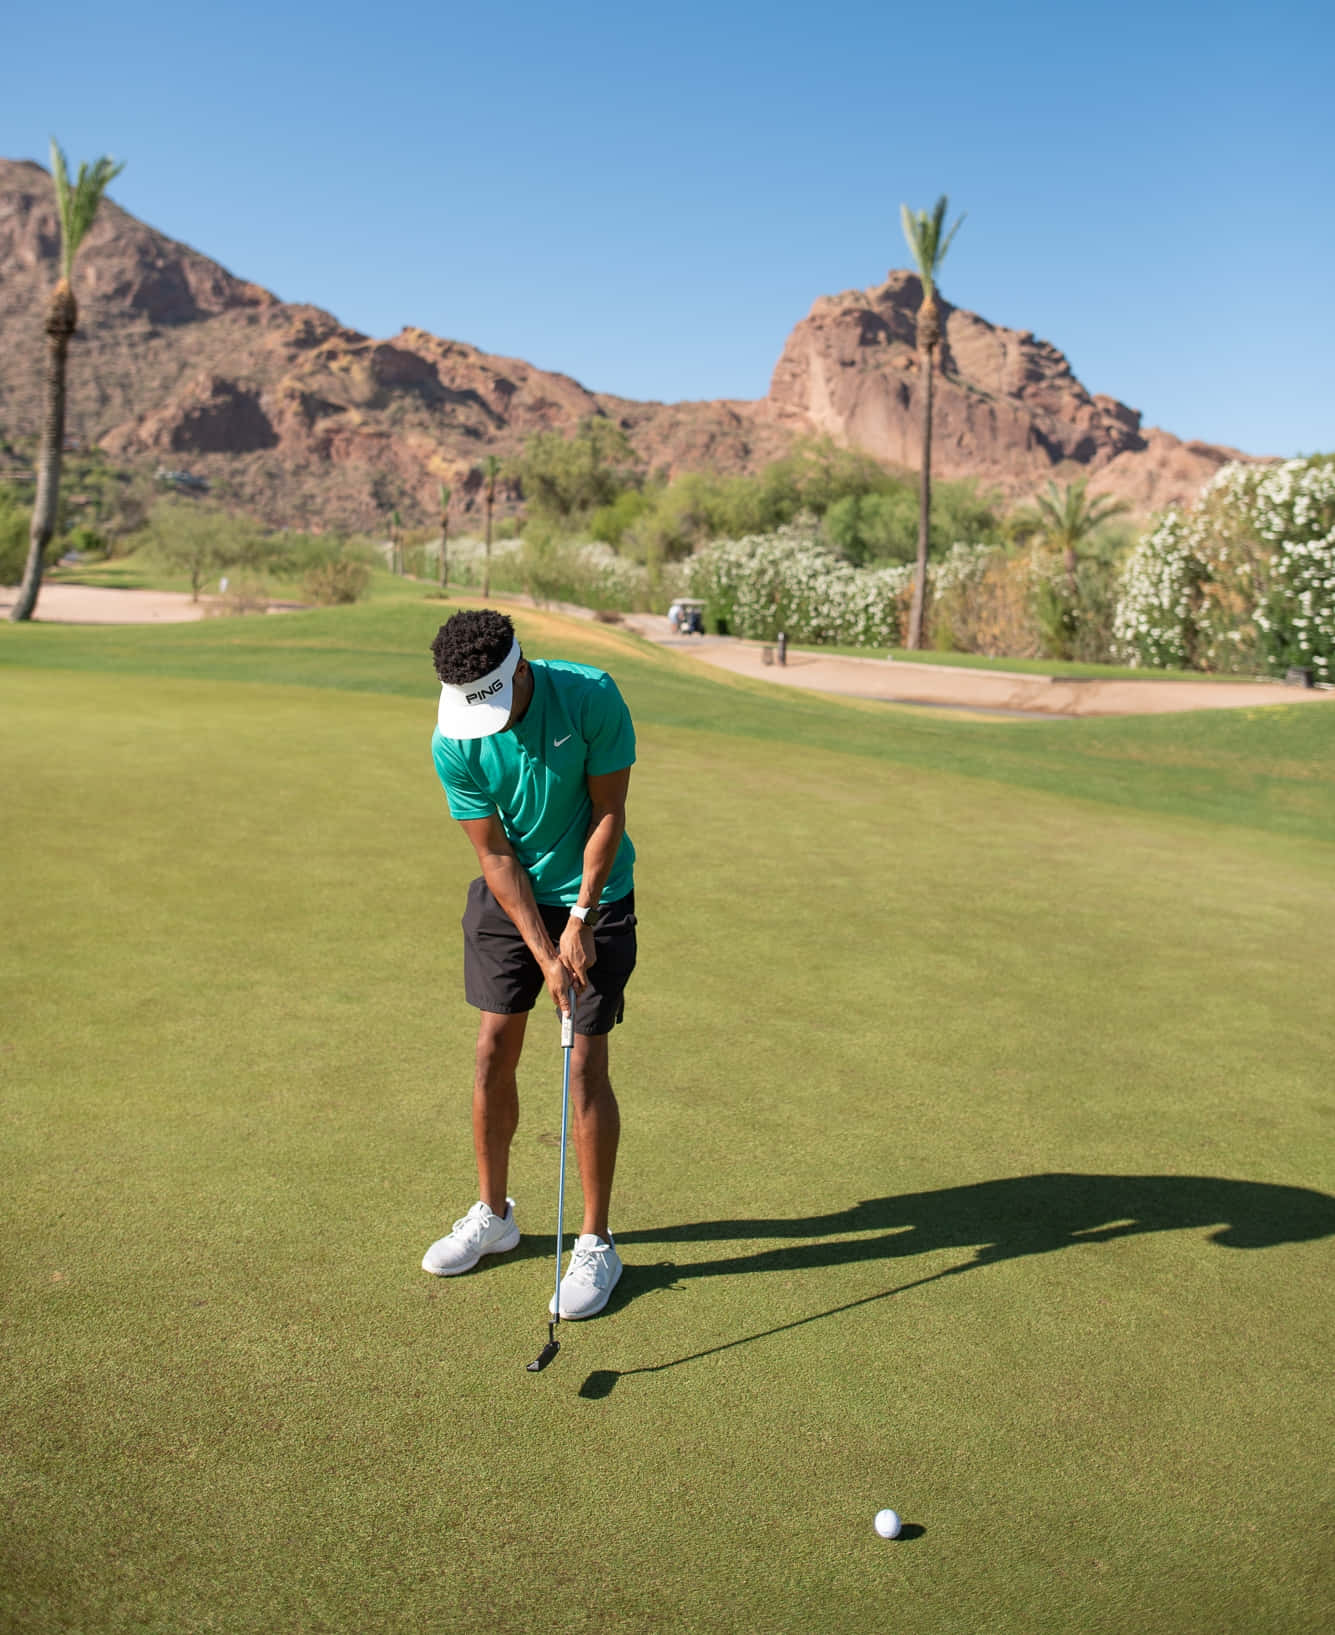 Caption: A Serene Golf Course at Sunset Wallpaper